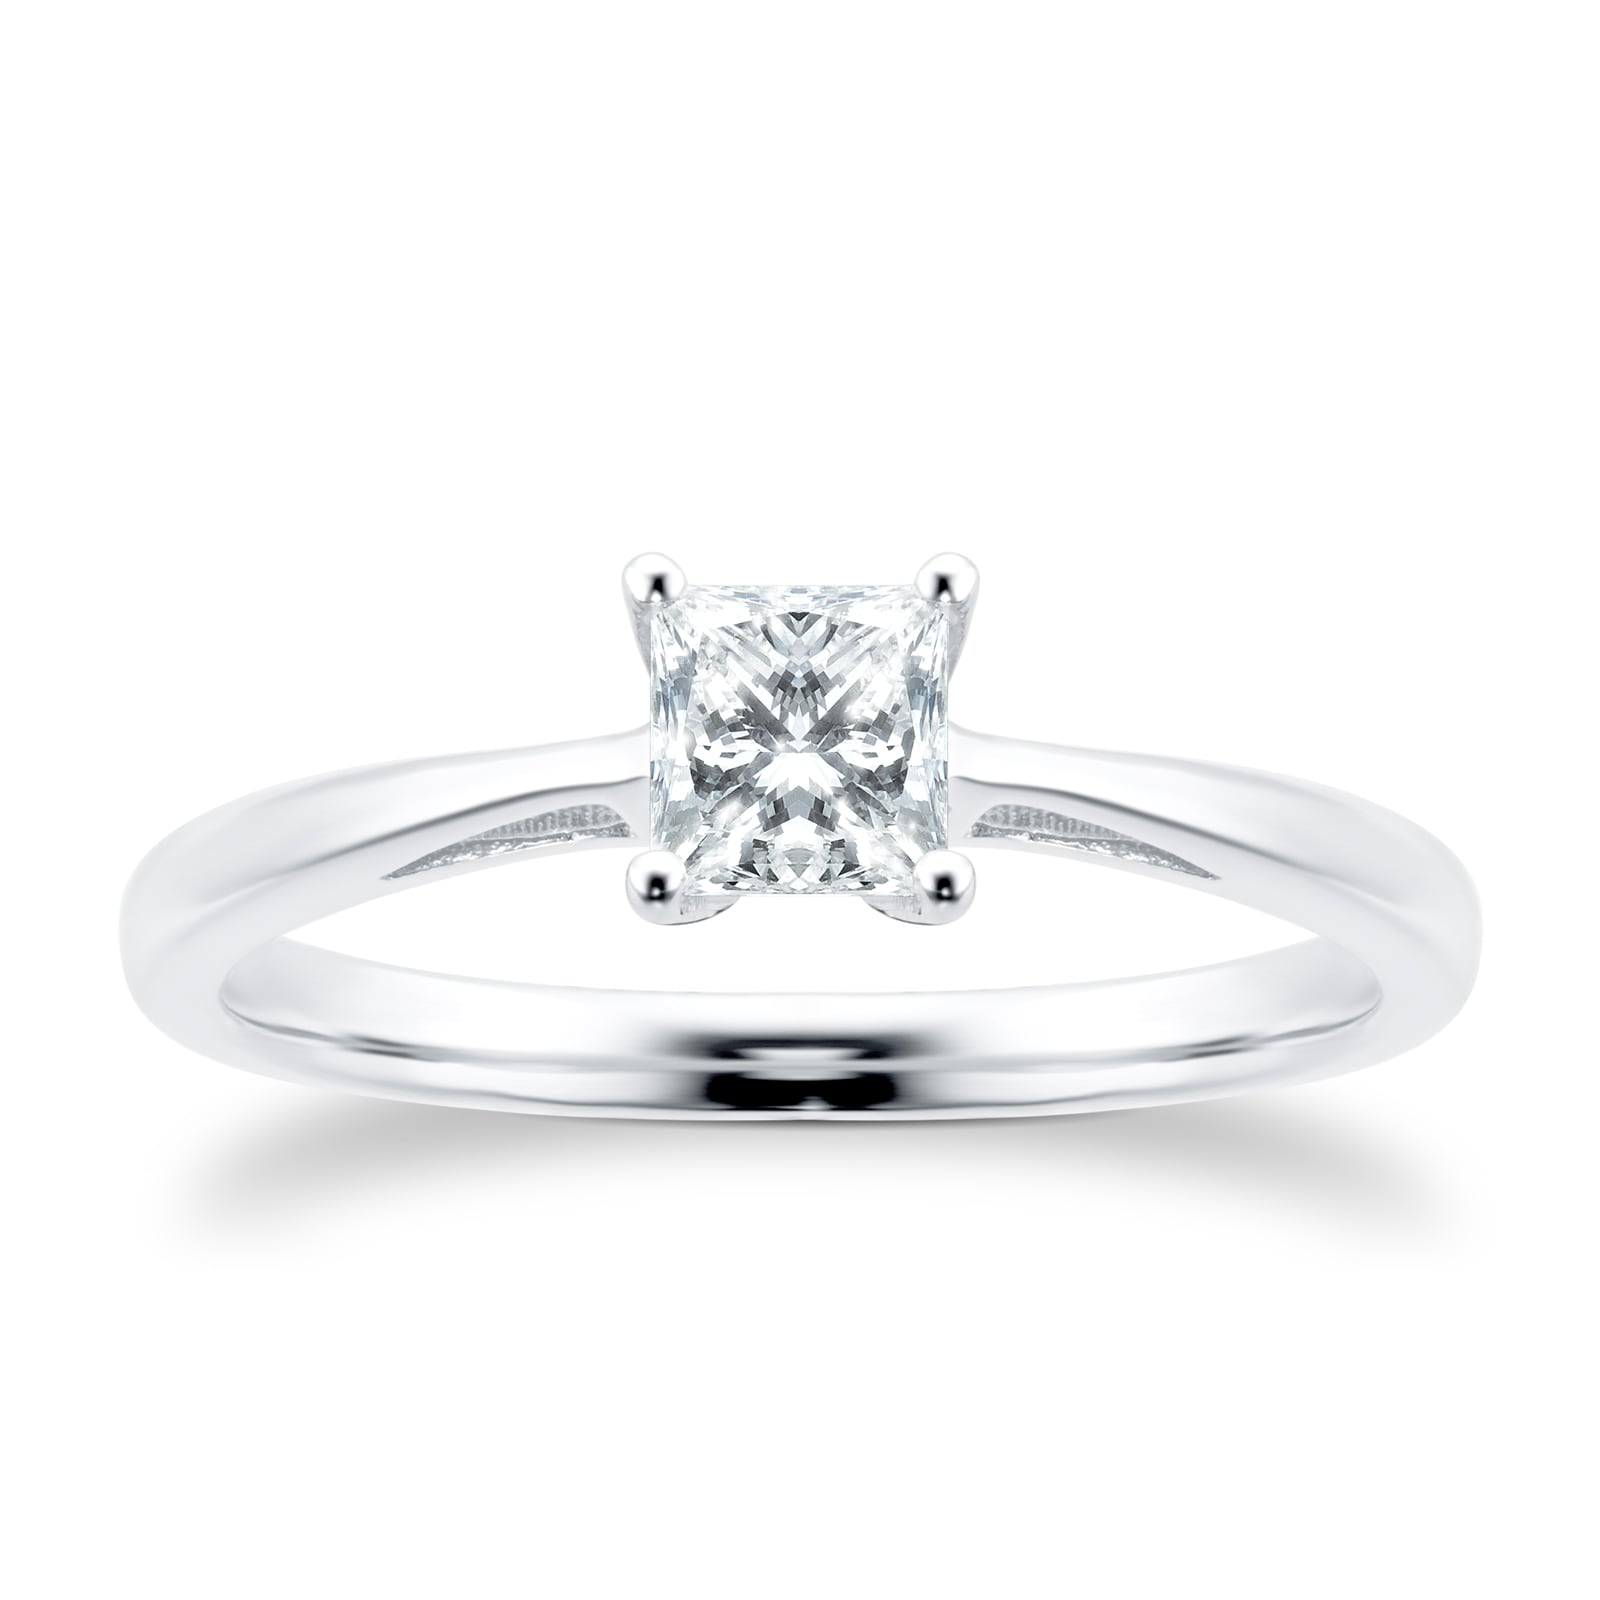 18ct White Gold 0.50ct Princess Cut Diamond Engagement Ring - Ring Size O